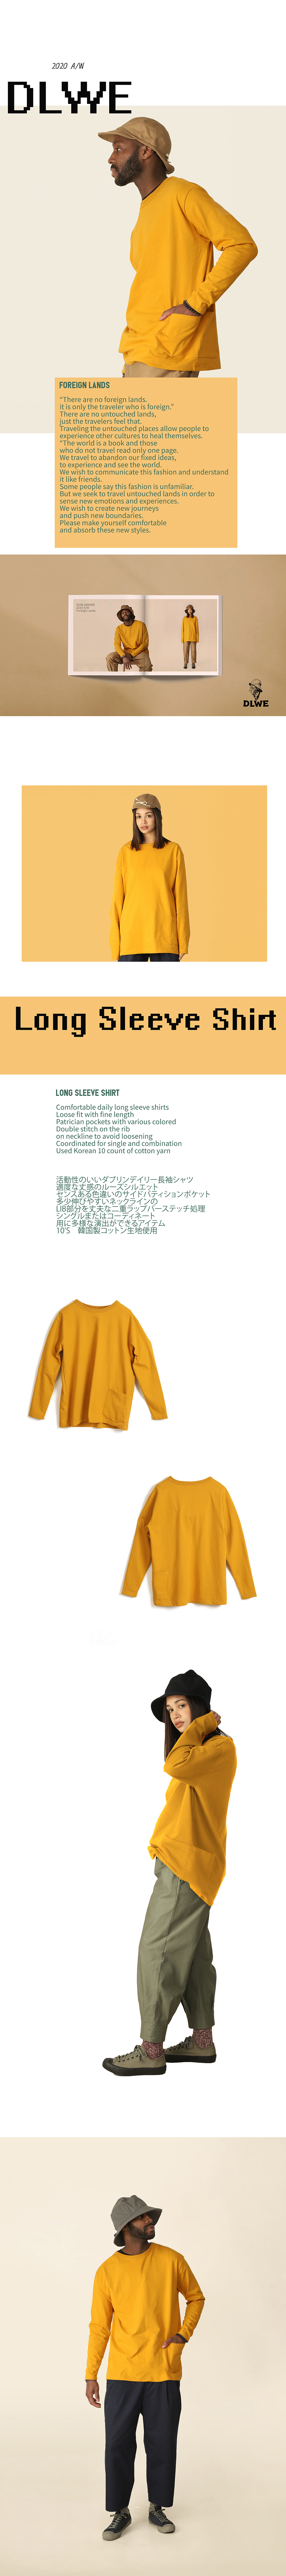 06_Long+Sleeve+Shirt_Deep+Cheddar_01.jpg